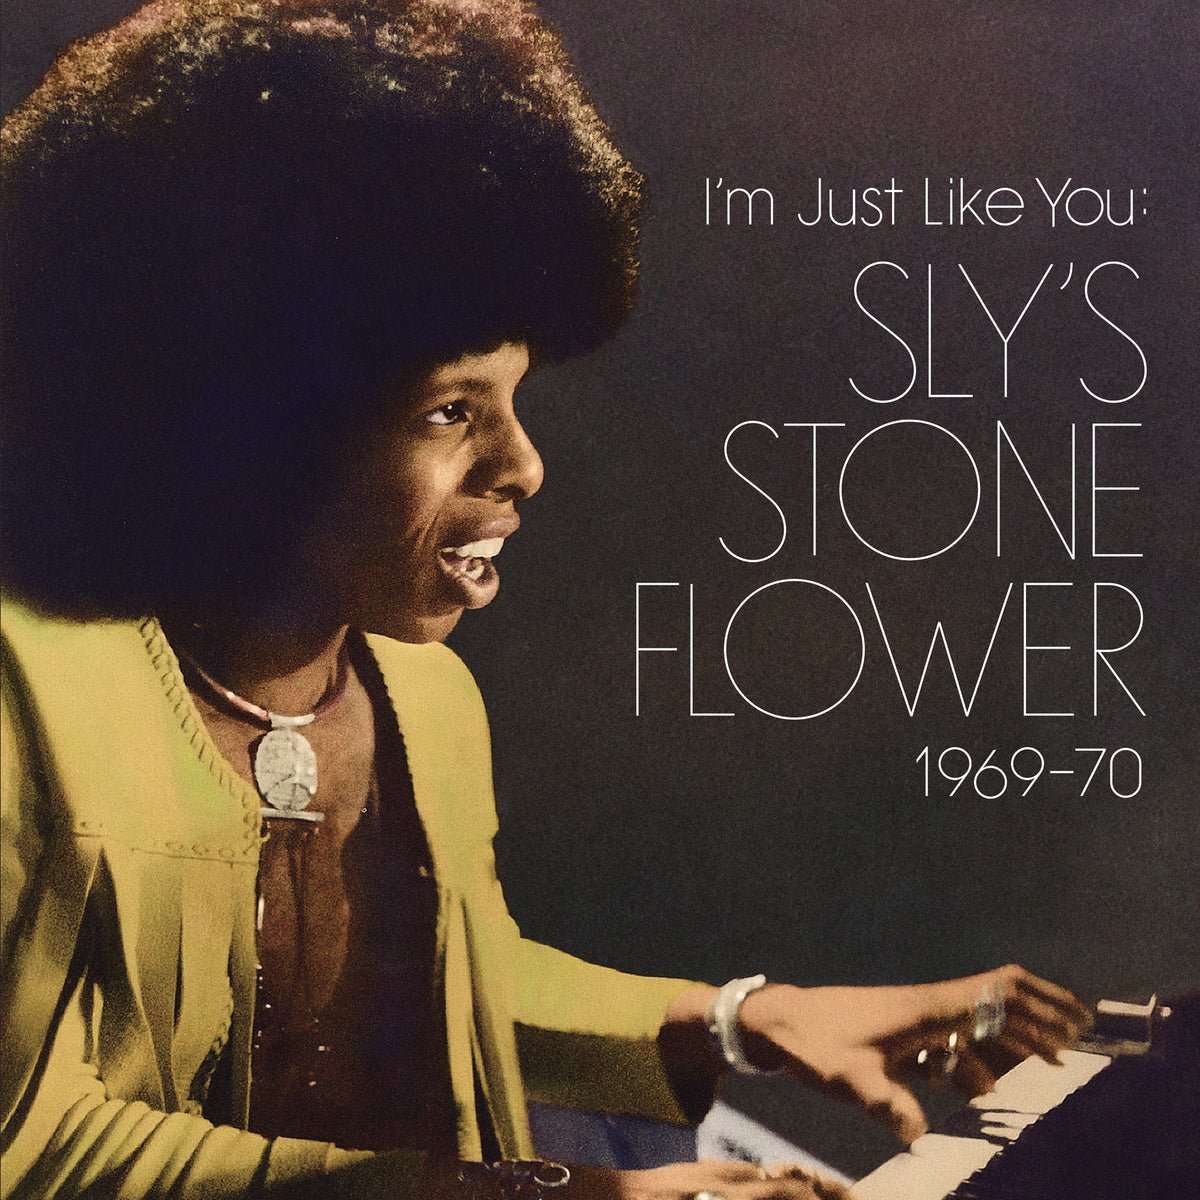 Sly Stone - I'm Just Like You: Sly's Stone Flower 1969-70 2LP (Compilation, Remastered, Gatefold)